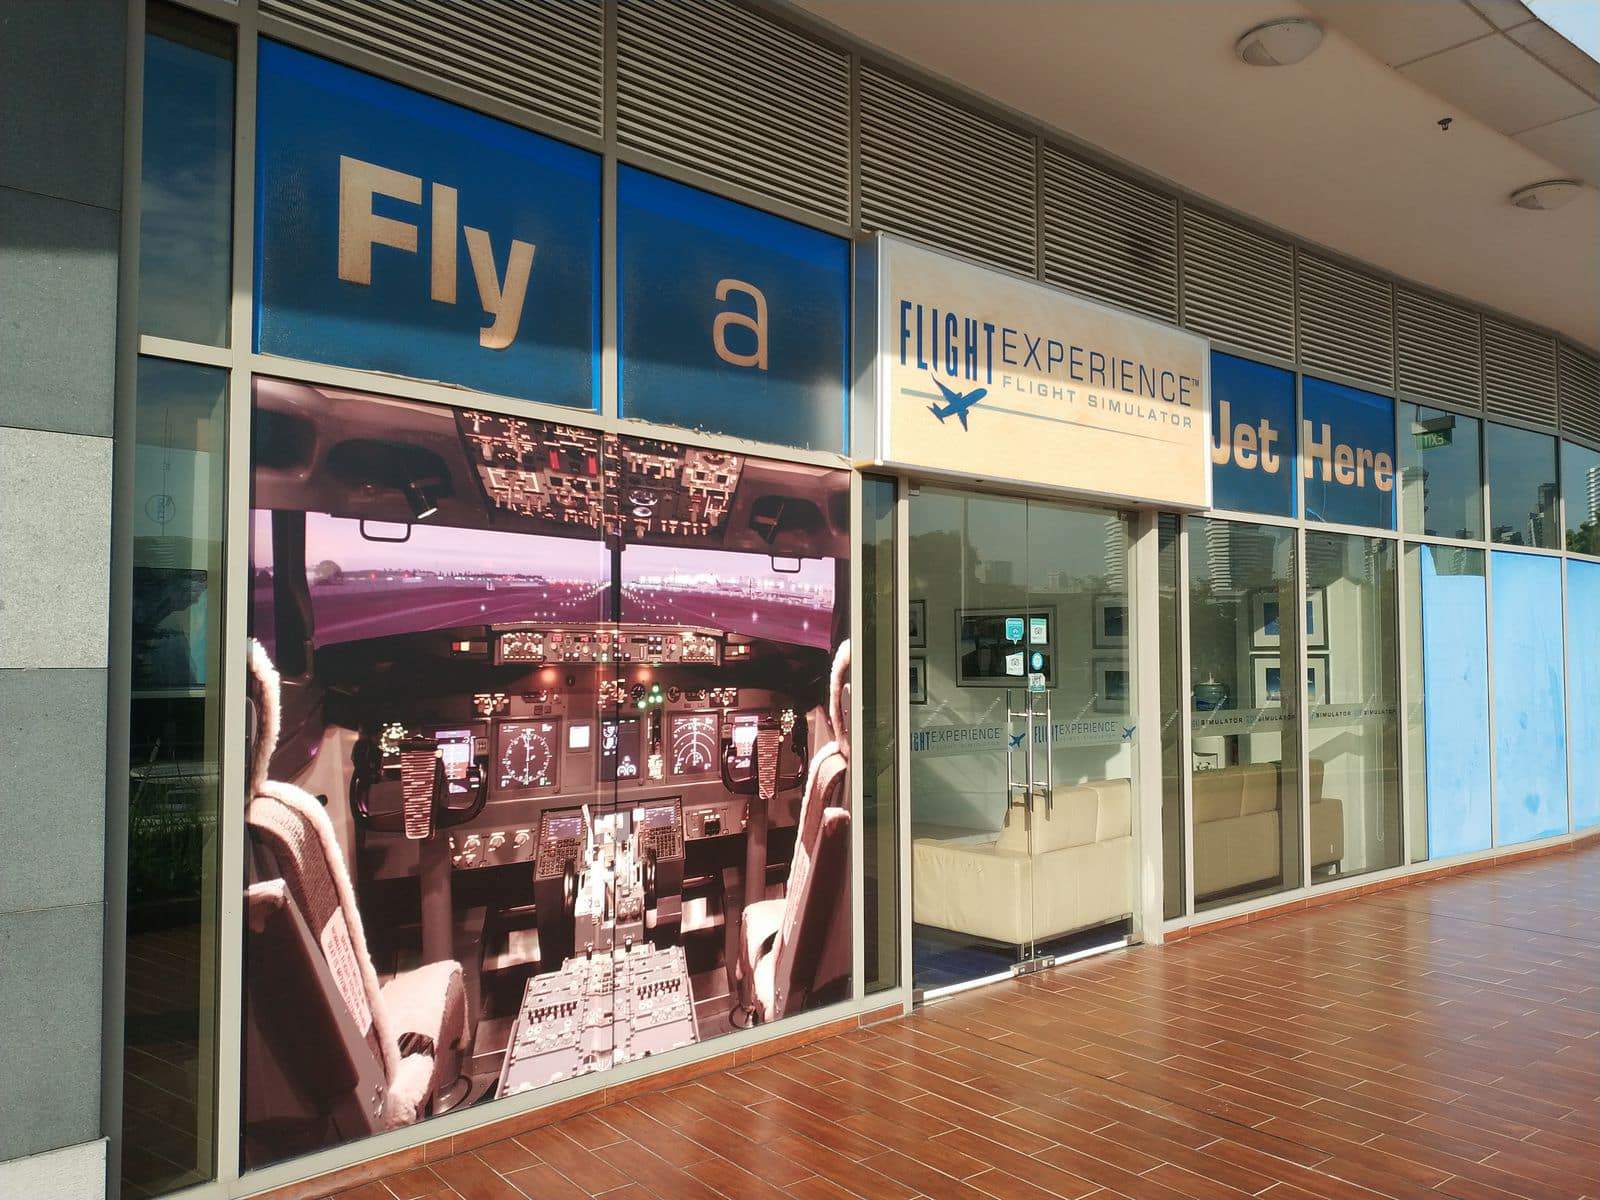 Flight Experience Singapore Flyer - Simulator Cost & Price